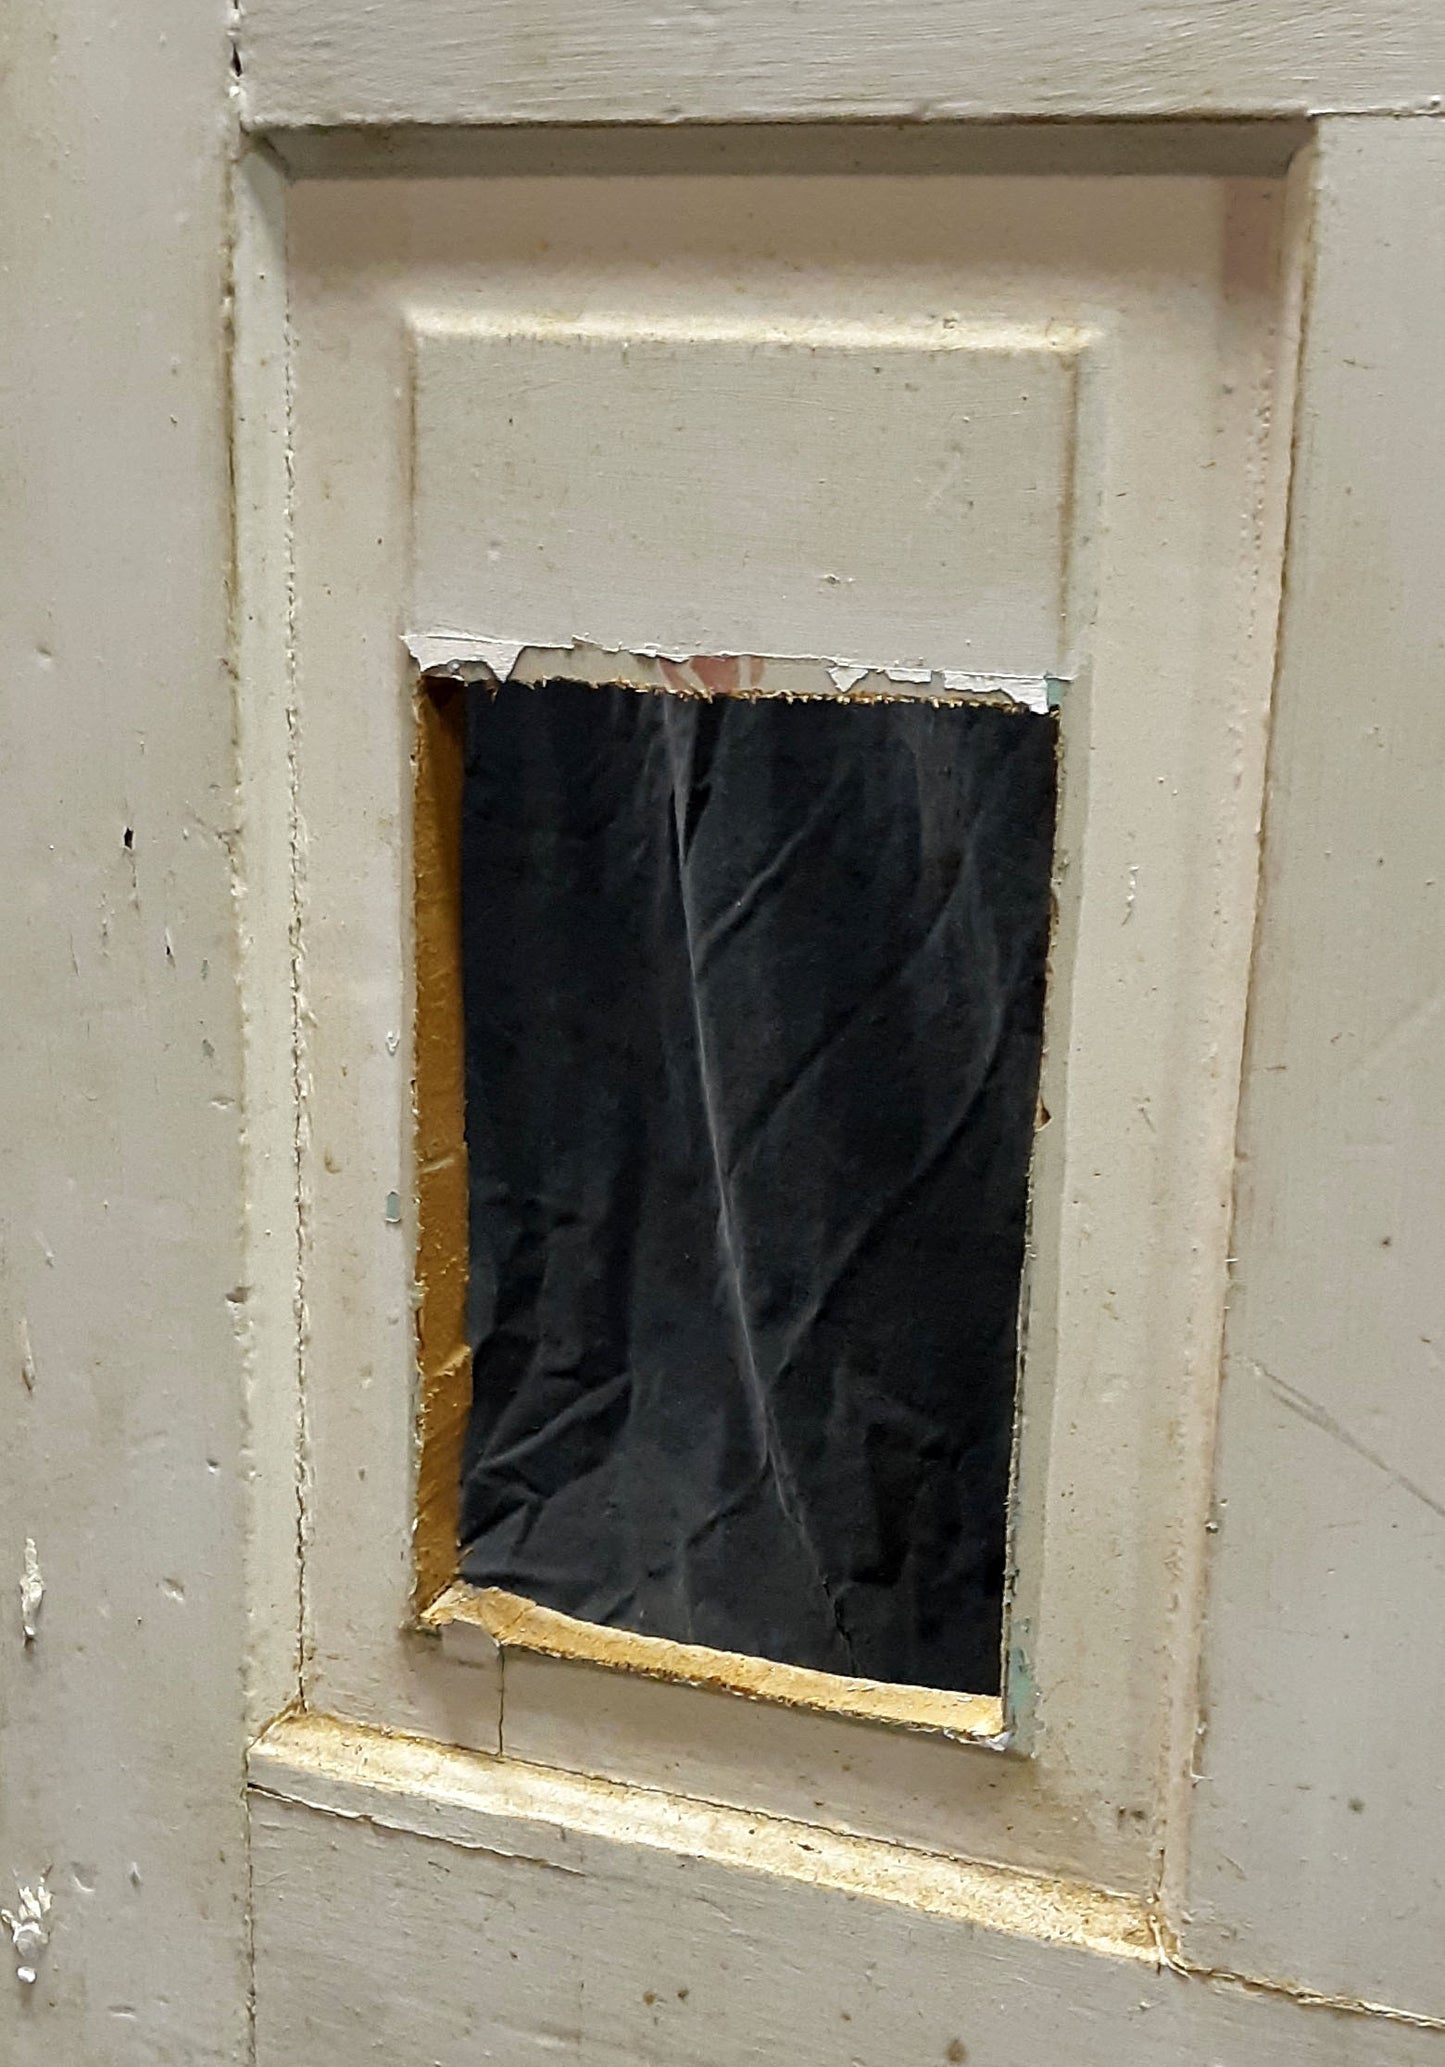 32"x81" Antique Vintage Old Reclaimed Salvaged Wood Wooden Entry Exterior Door Window Wavy Glass